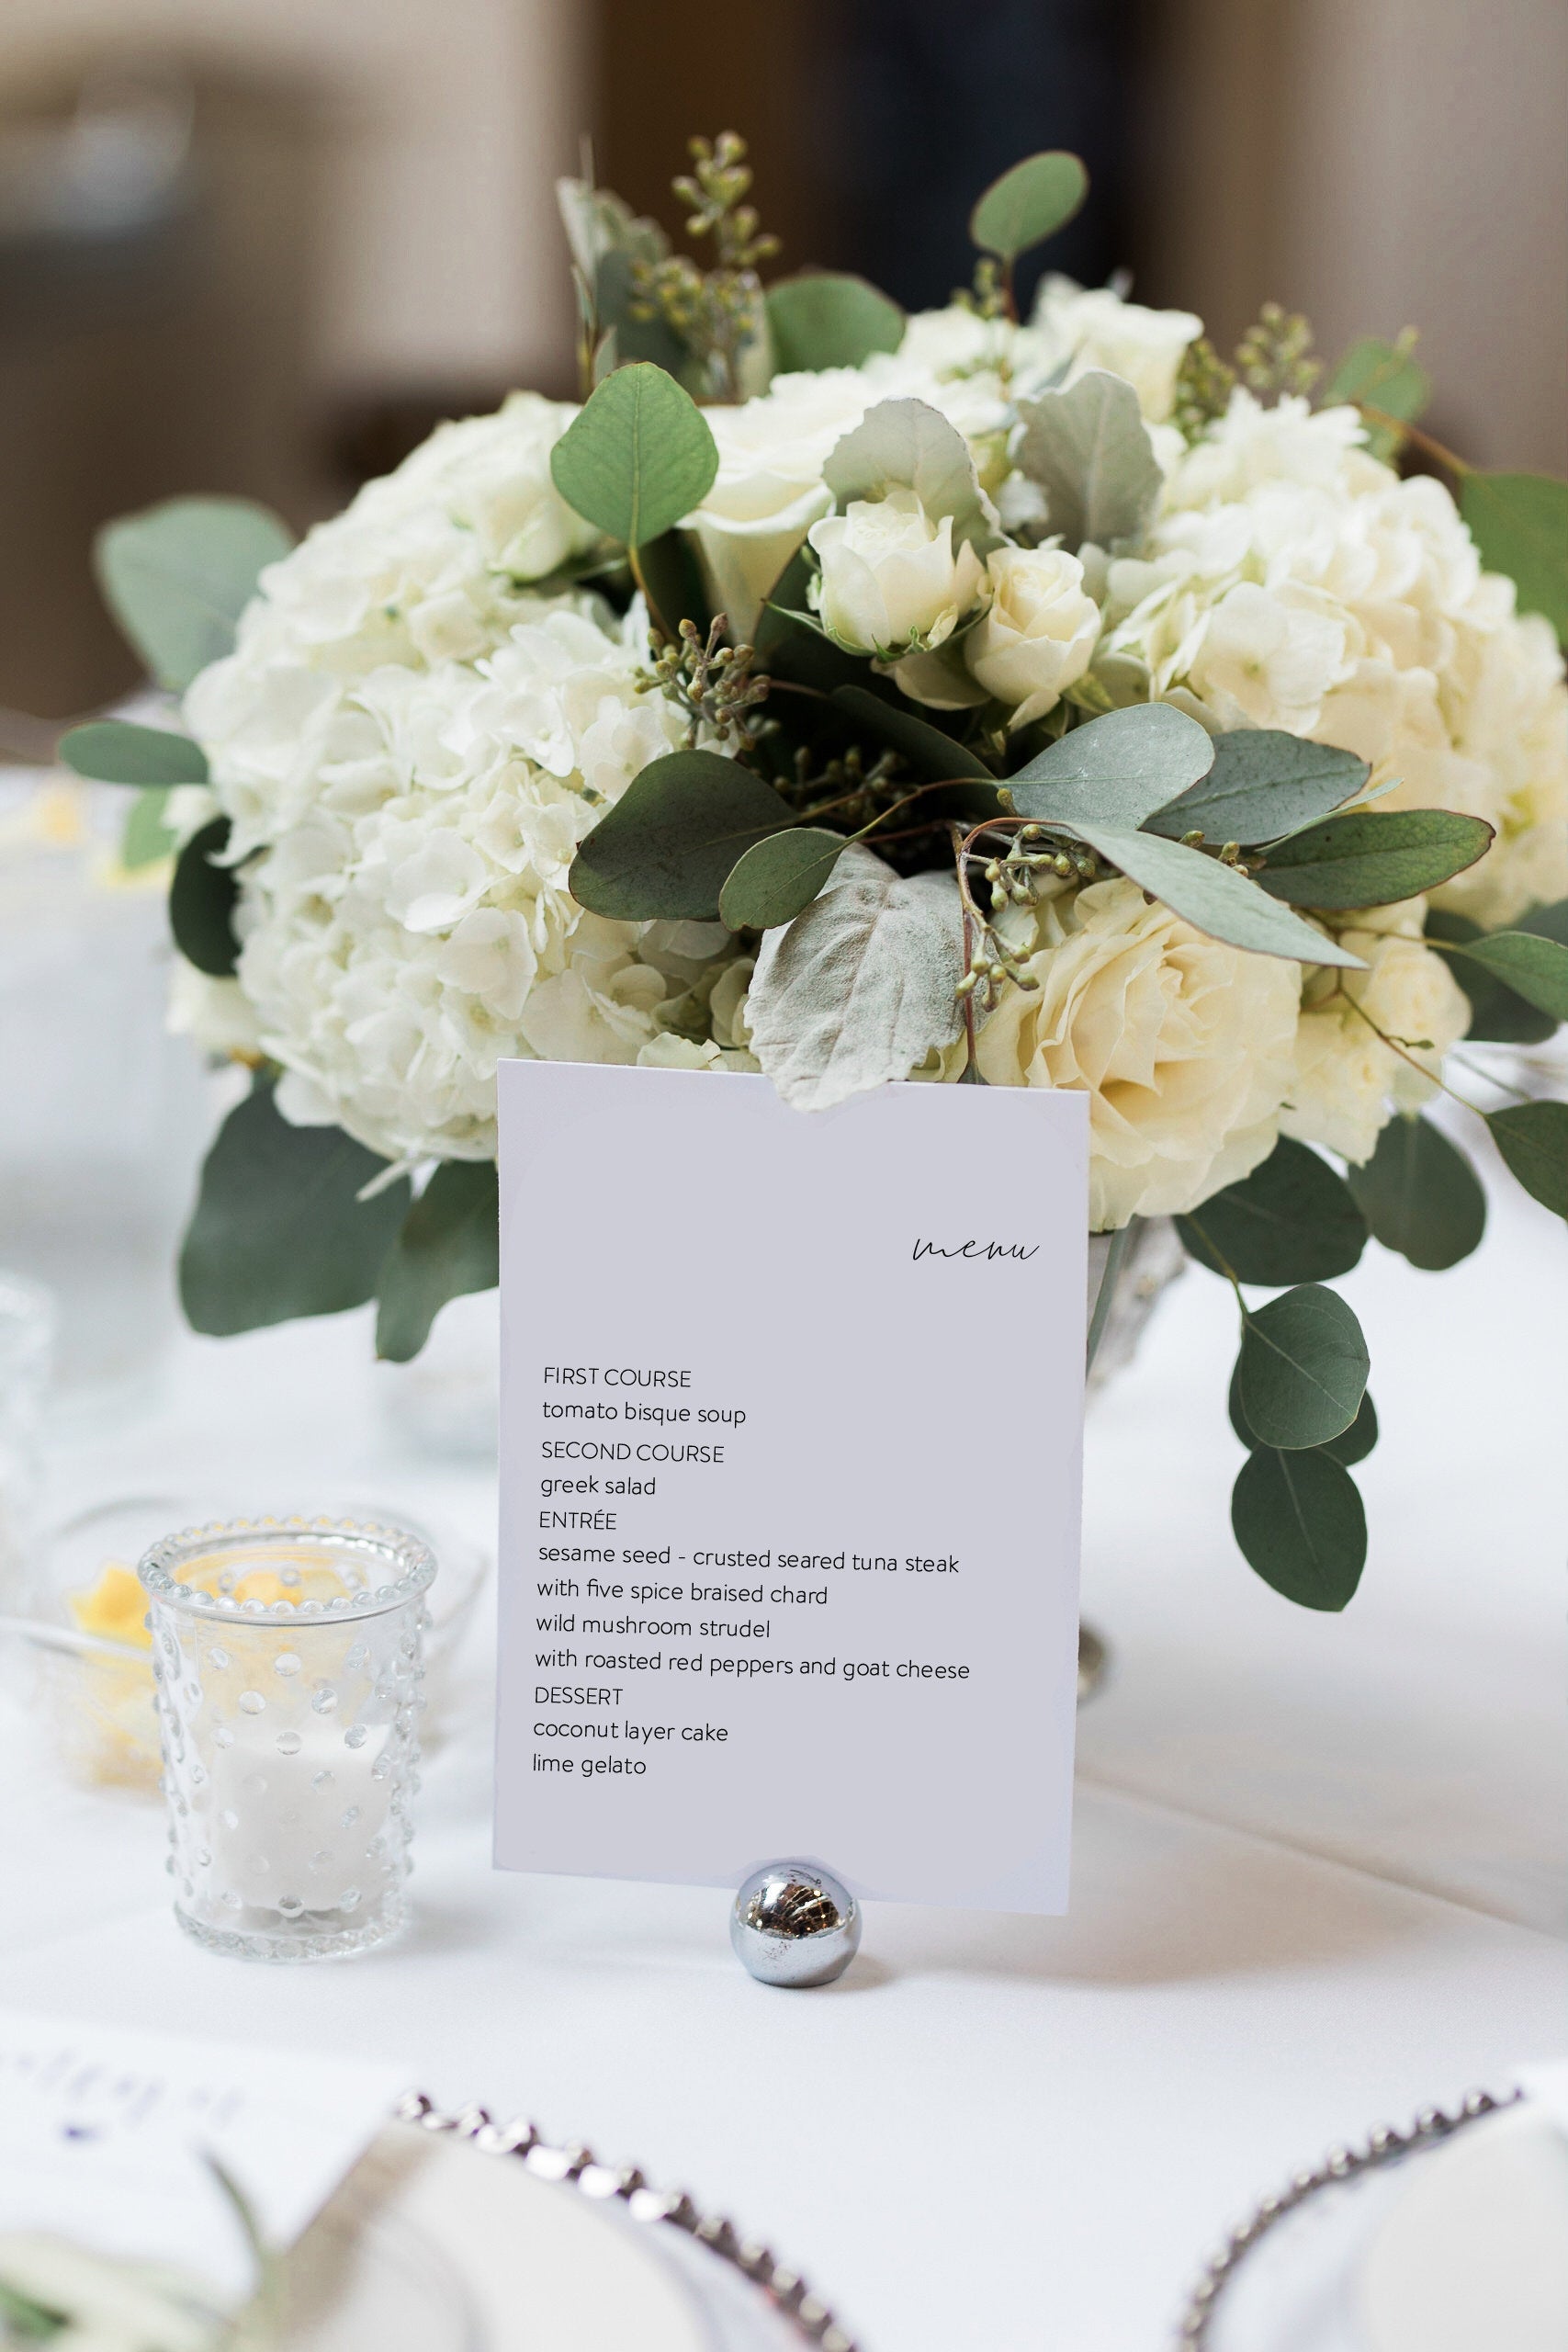 Minimalist Wedding Menu, Printable Wedding Menu Template,Dinner Menu Card, Instant Download Editable Menu Cards, Templett - Julia MENU|PROGRAMS|TIMELINE SAVVY PAPER CO